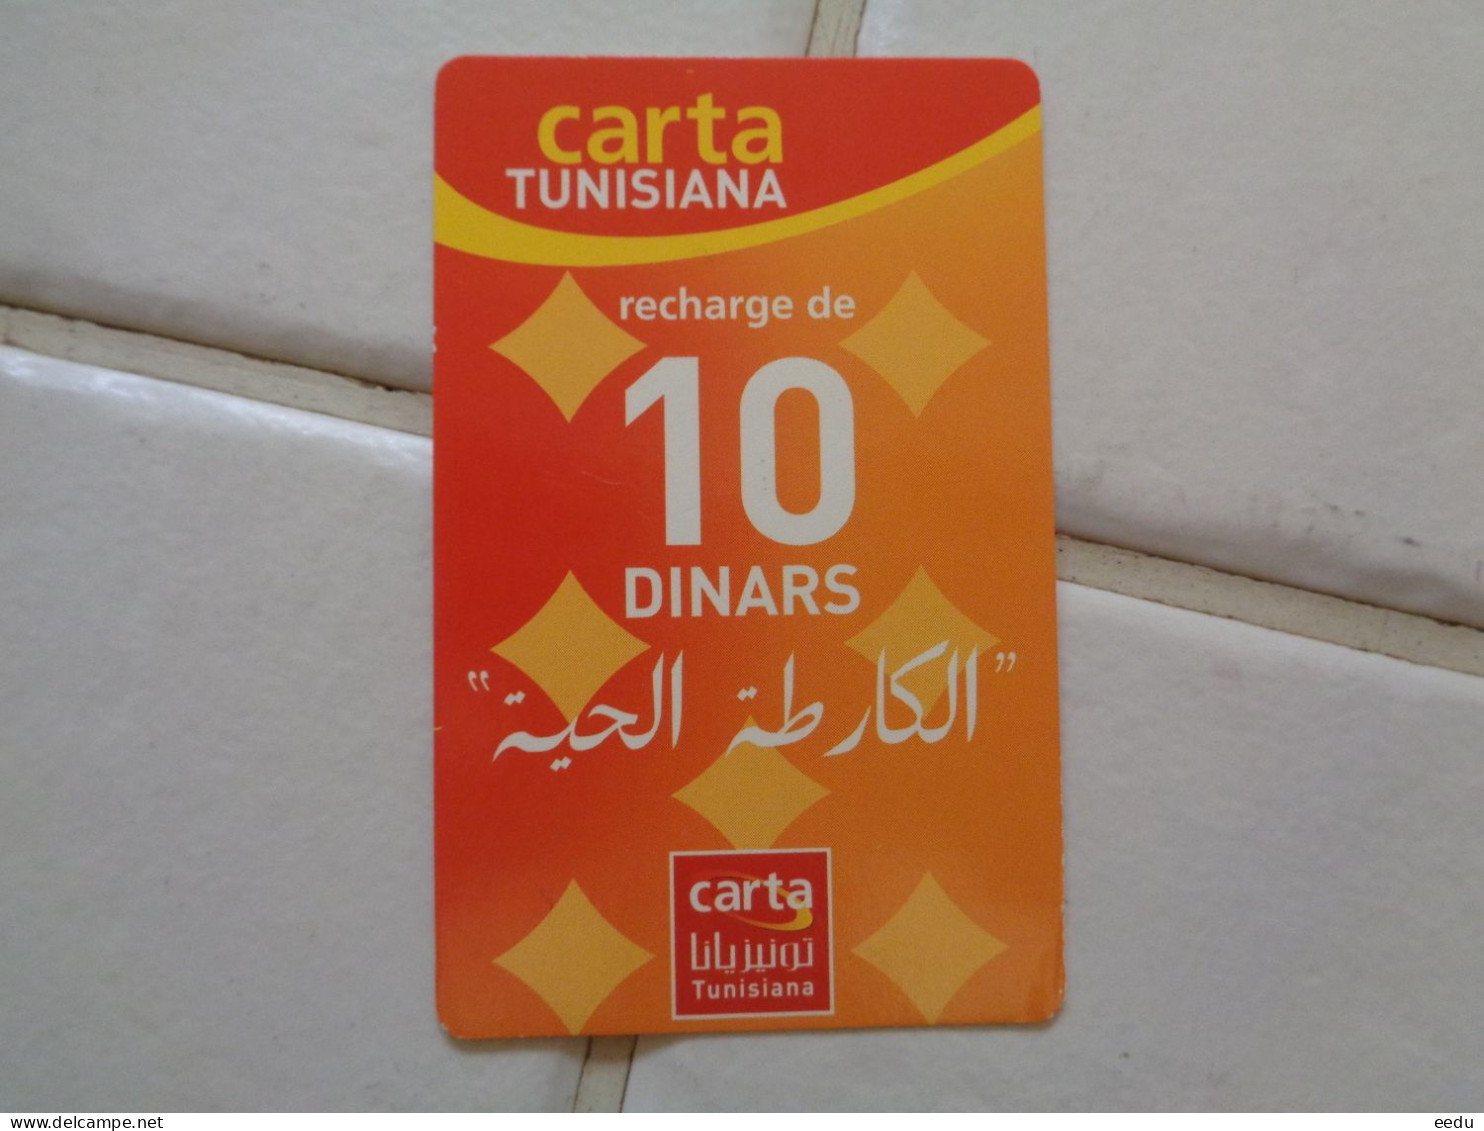 Tunisia Phonecard - Tunesien